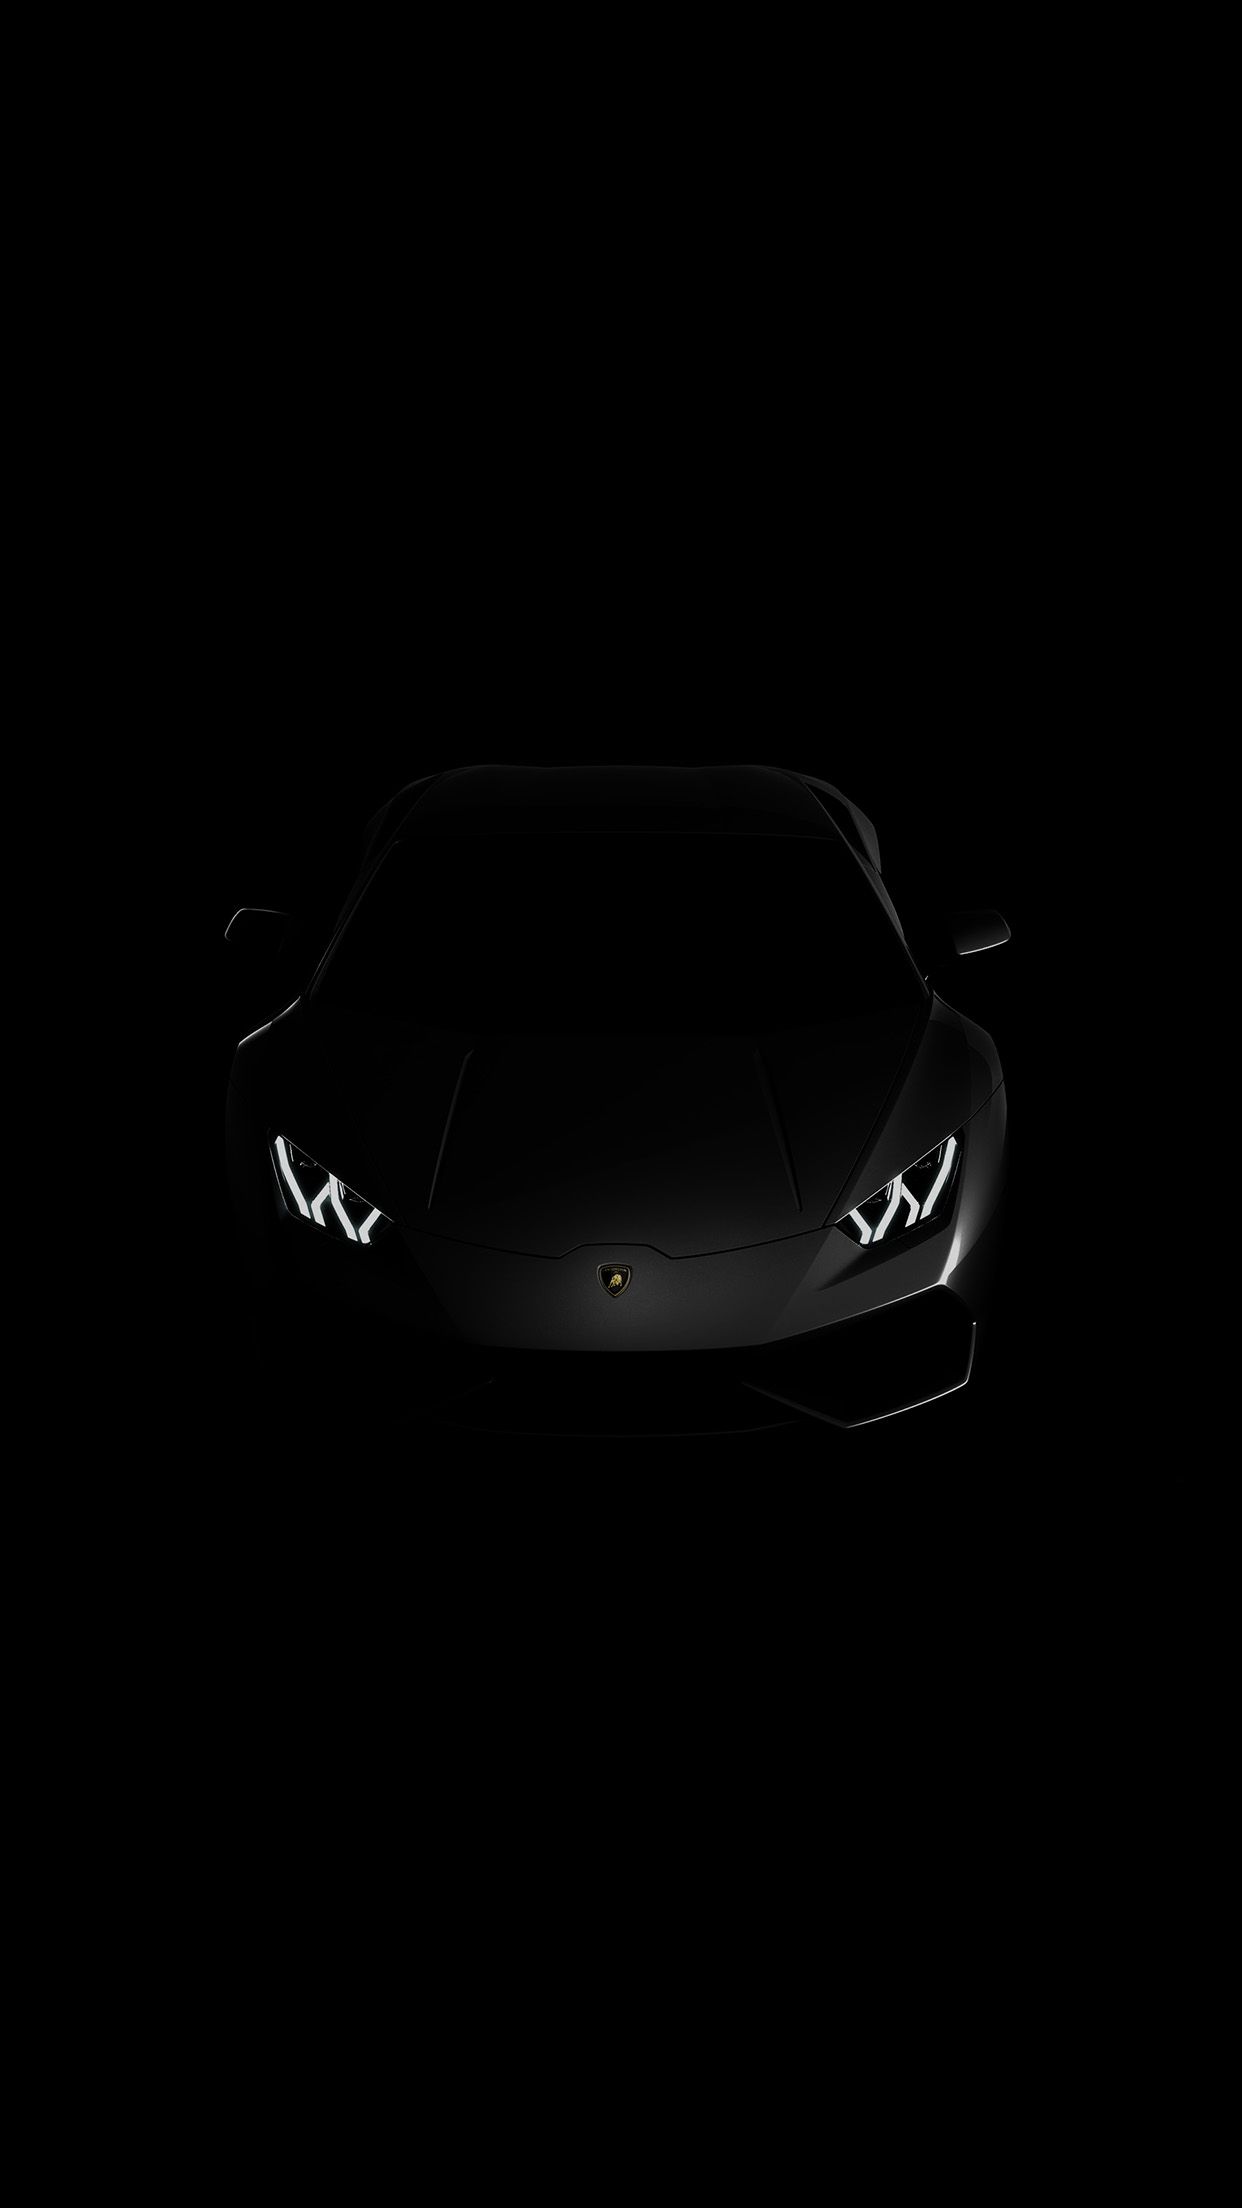 Lambhini Black Super Car Shadow Android Wallpaper